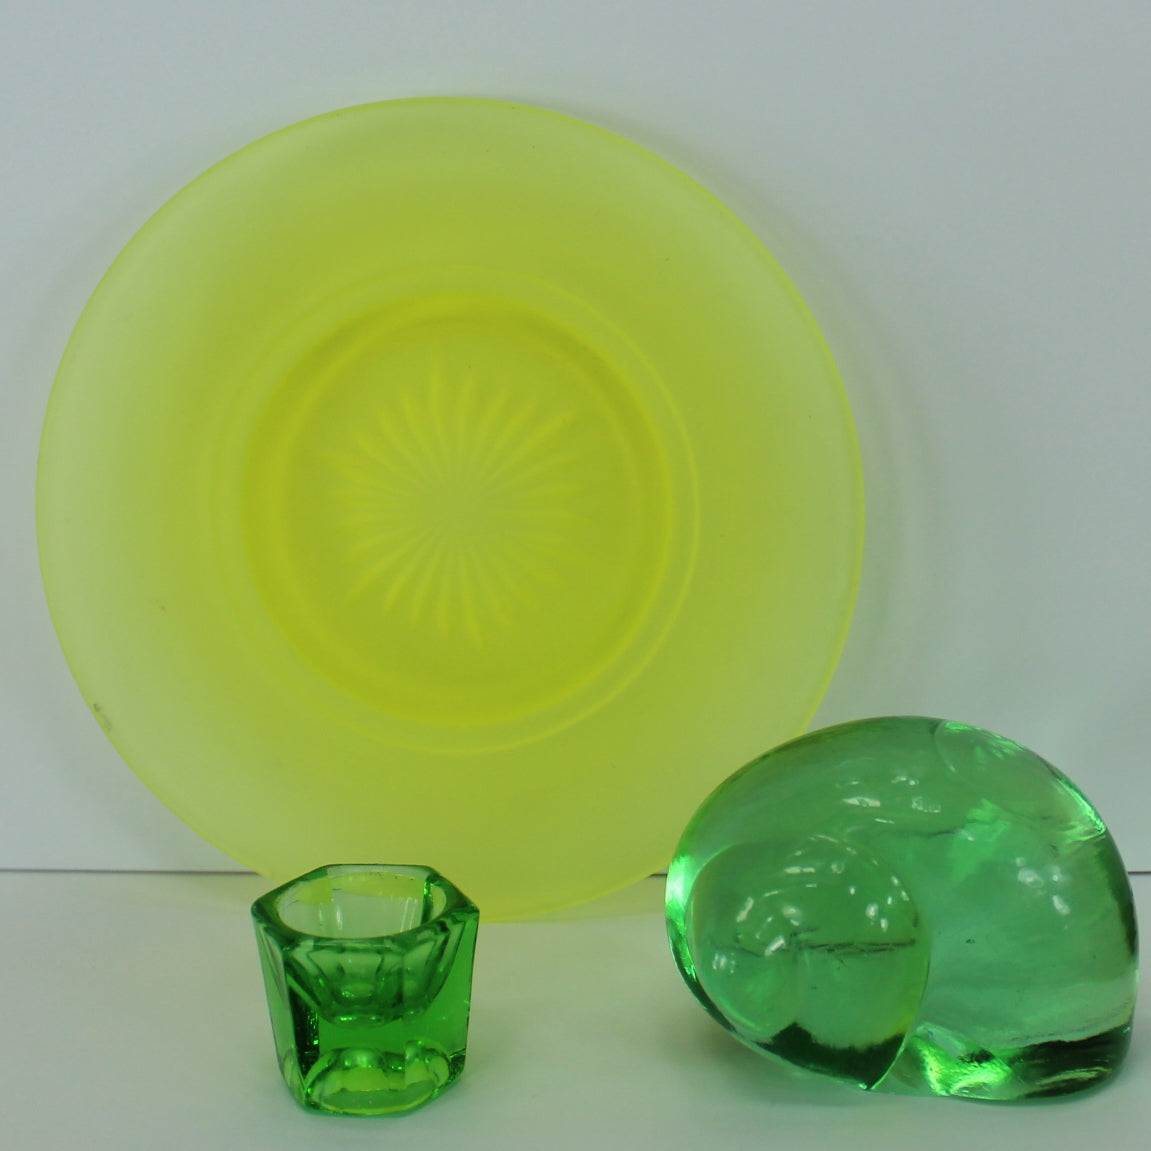 Collection 3 Pieces Vintage Glass - Yellow Uranium Plate - Freen Snail & Salt CellarCollection 3 Pieces Vintage Glass - Yellow Uranium Plate - Green Snail & Salt Cellar